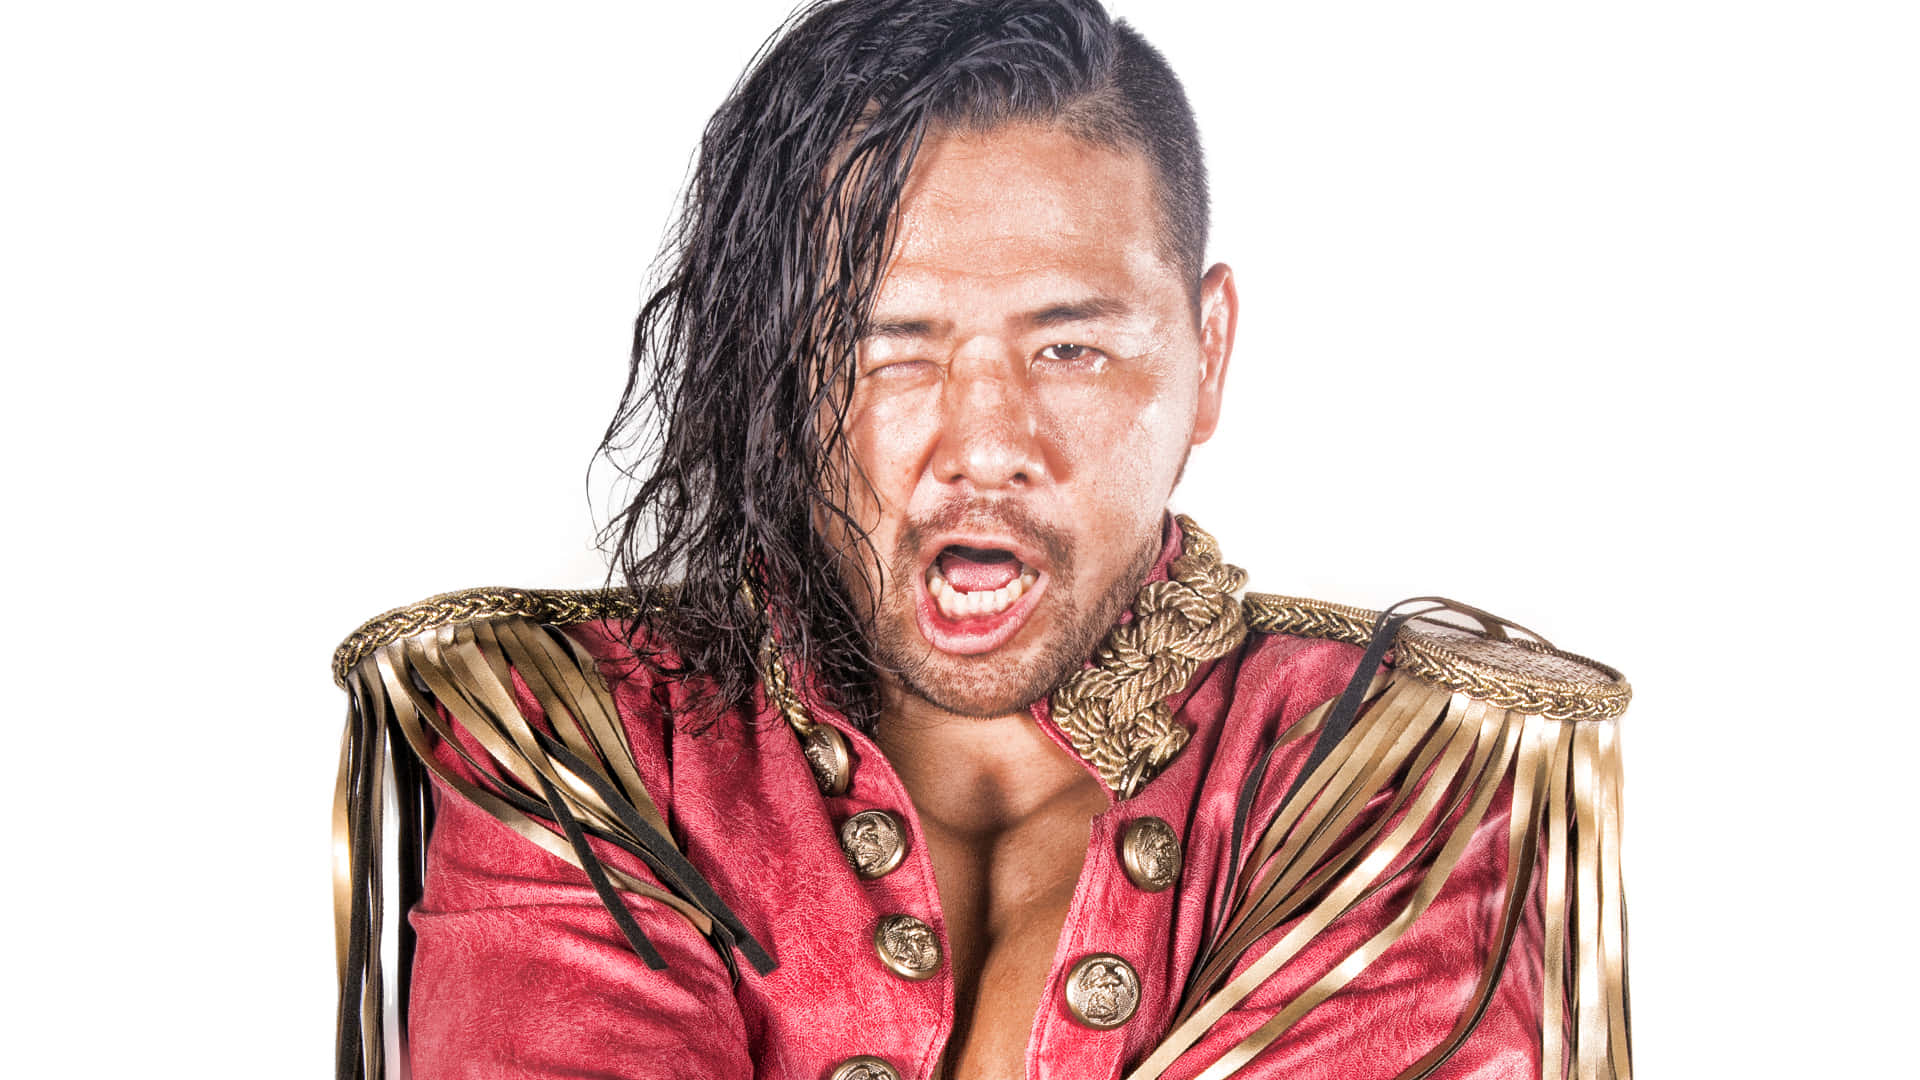 Renderde La Cara De Wwe Shinsuke Nakamura Fondo de pantalla